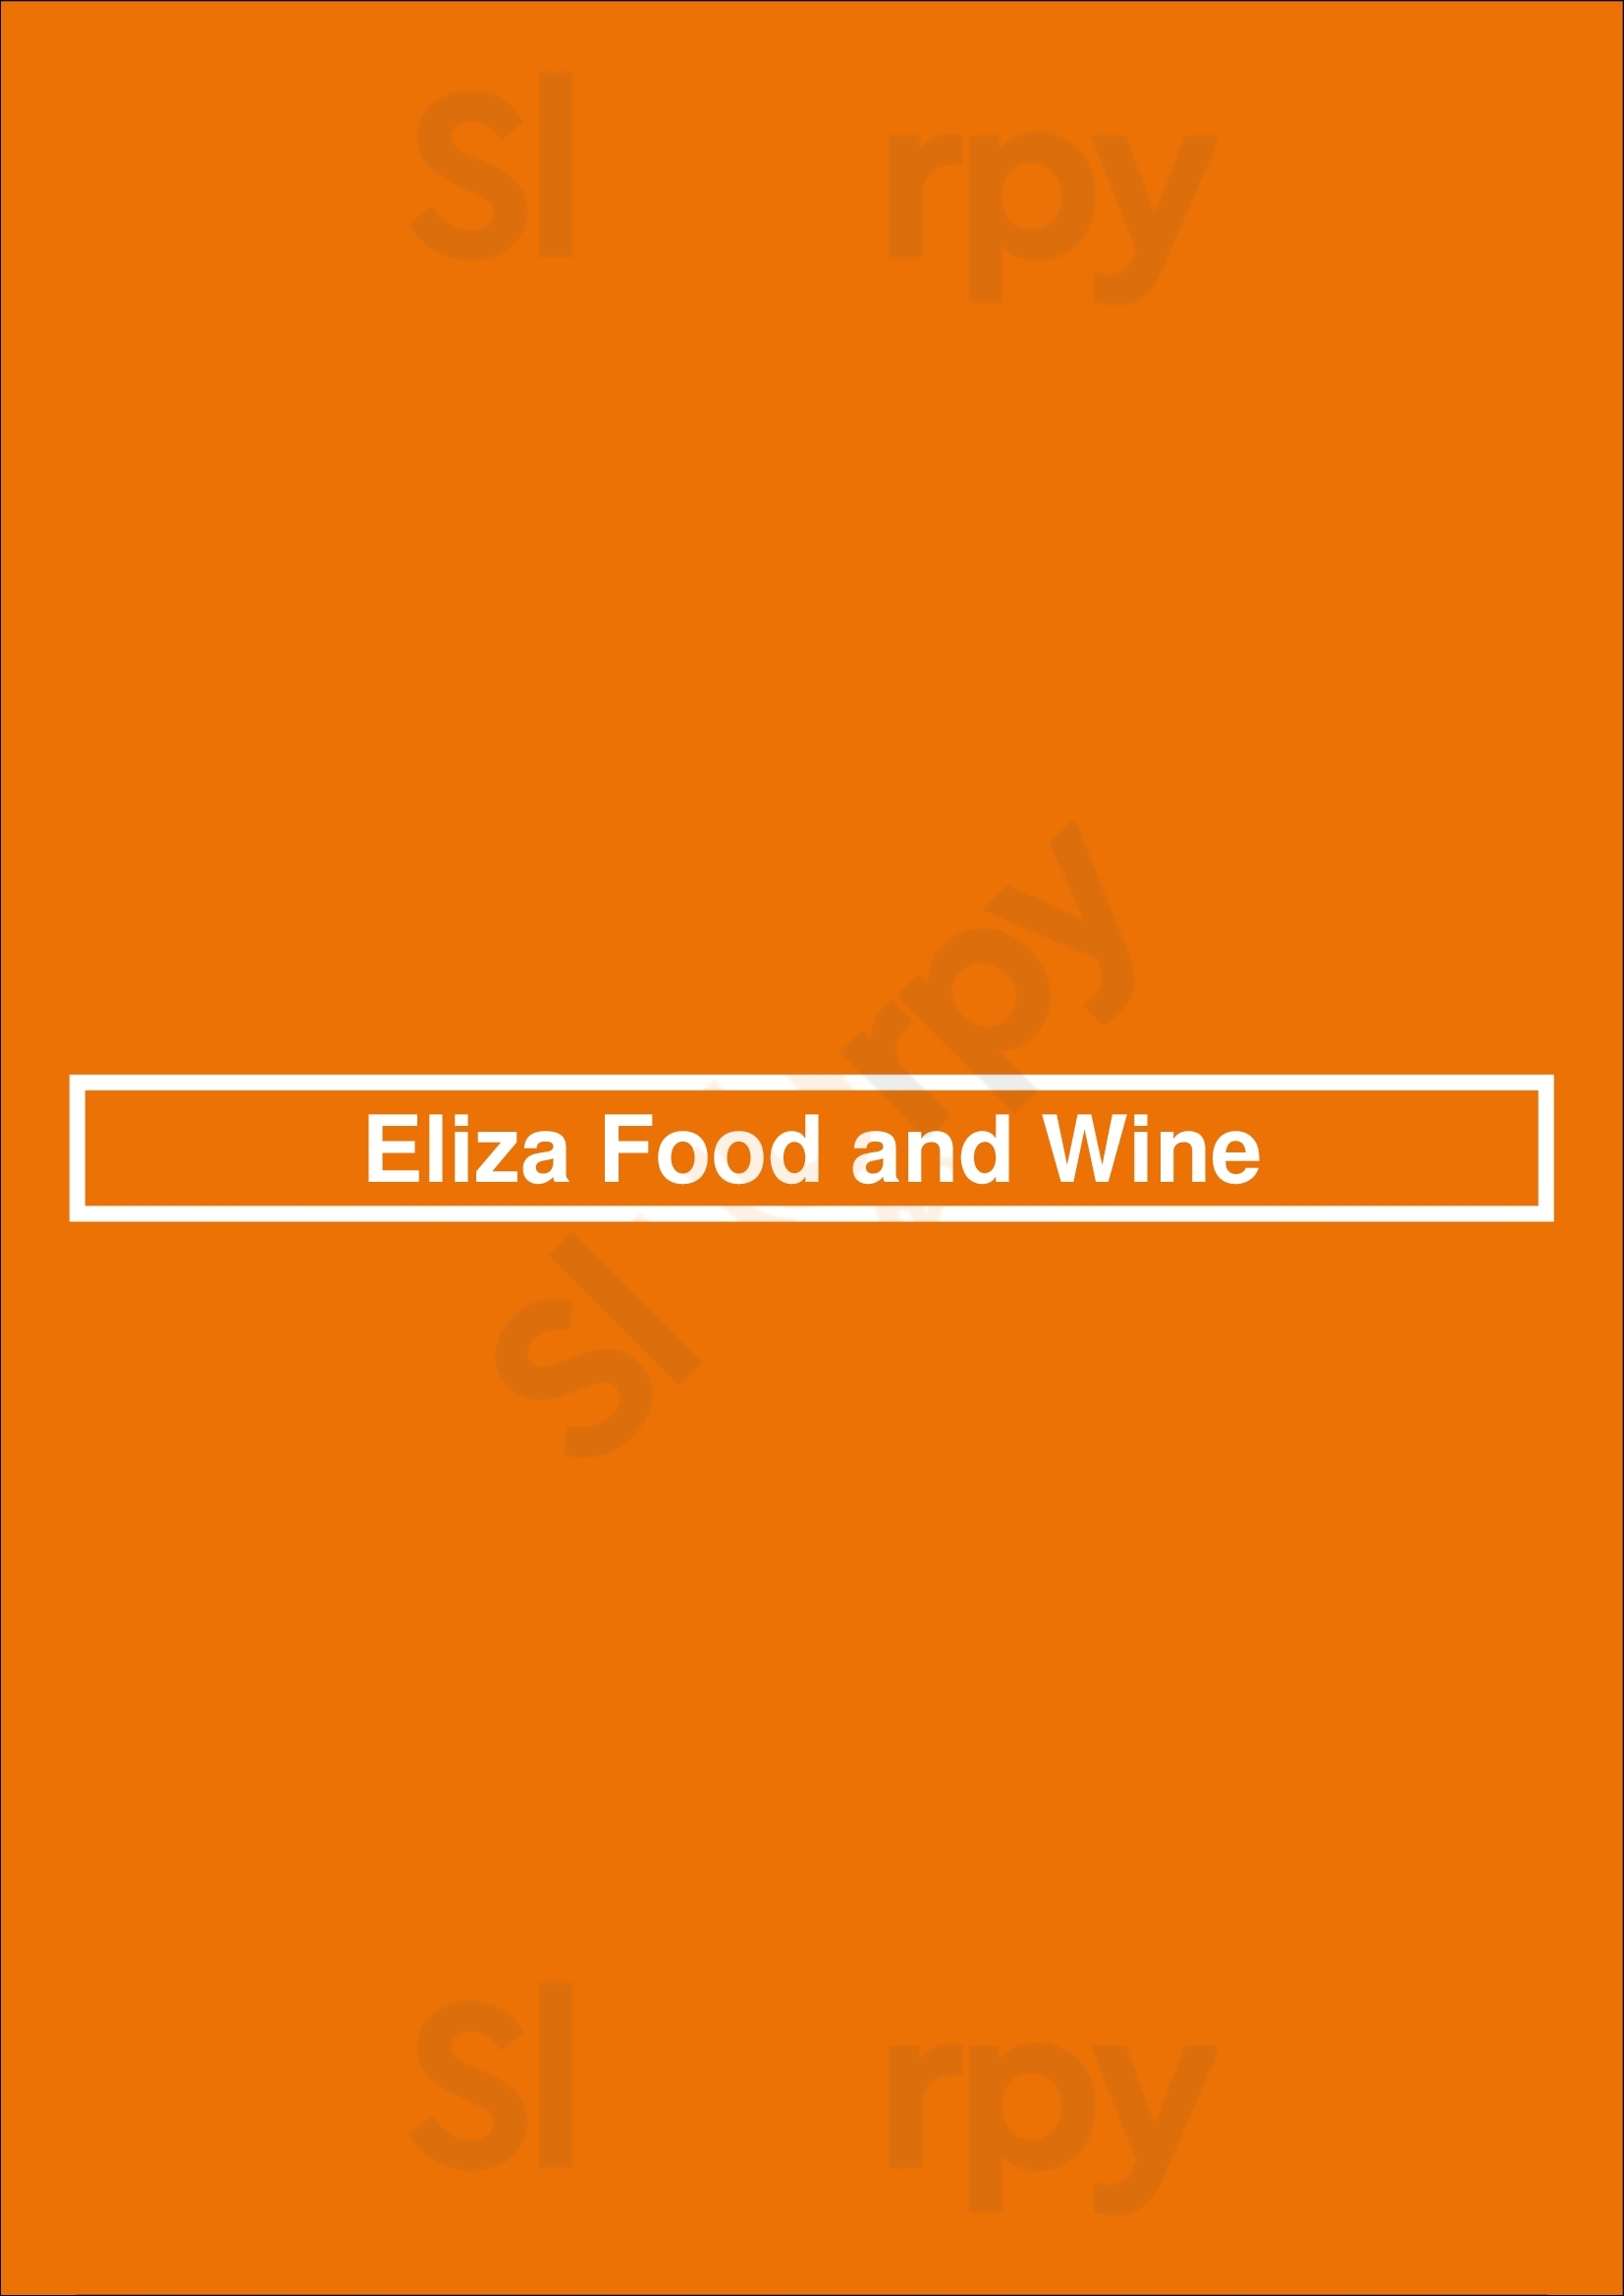 Eliza Food And Wine Sydney Menu - 1